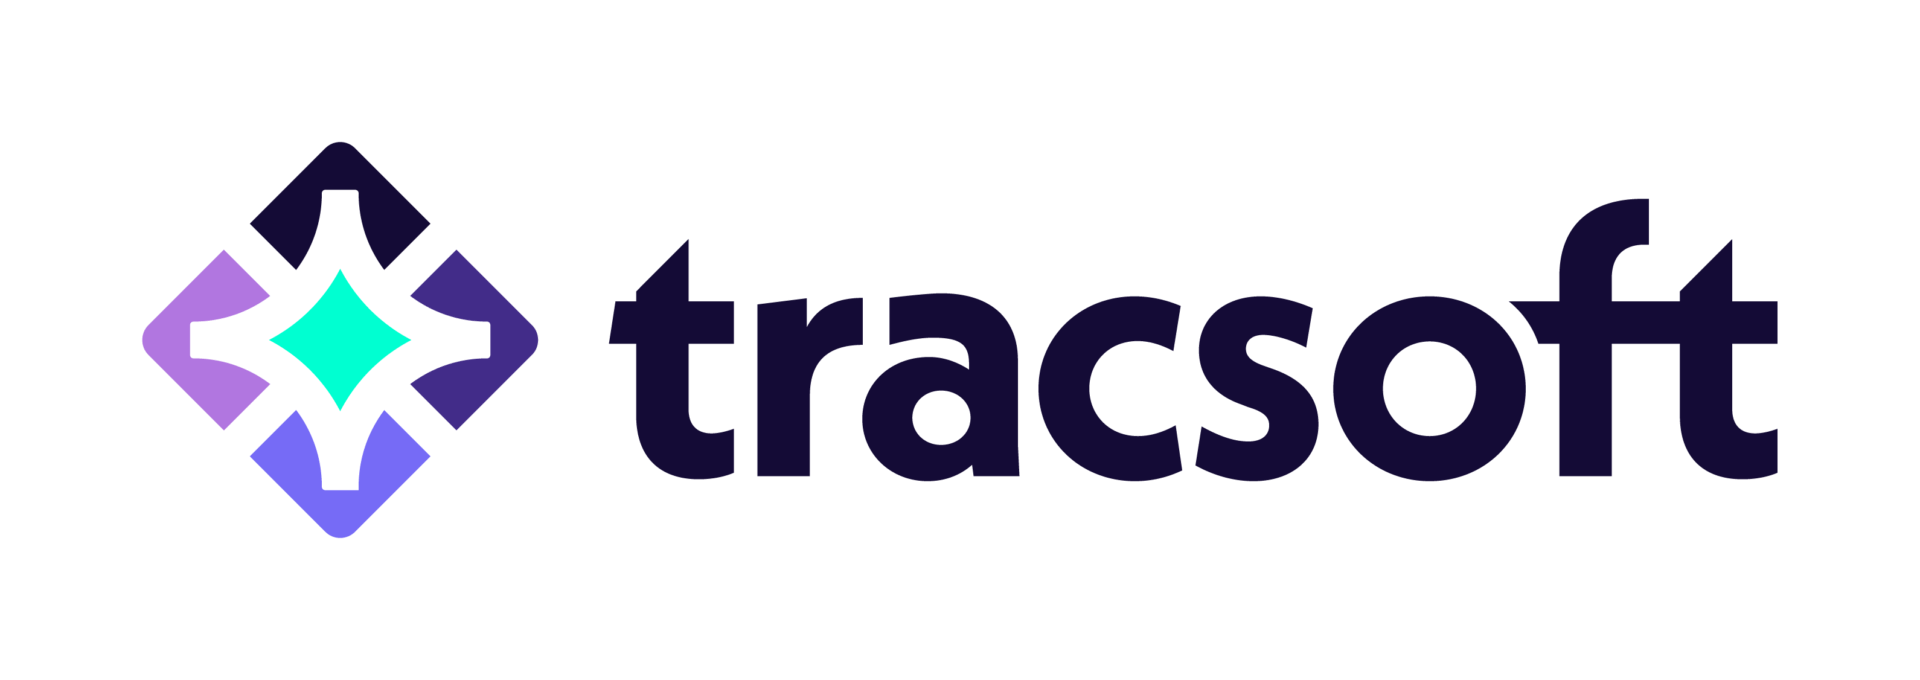 tracsoft logo color